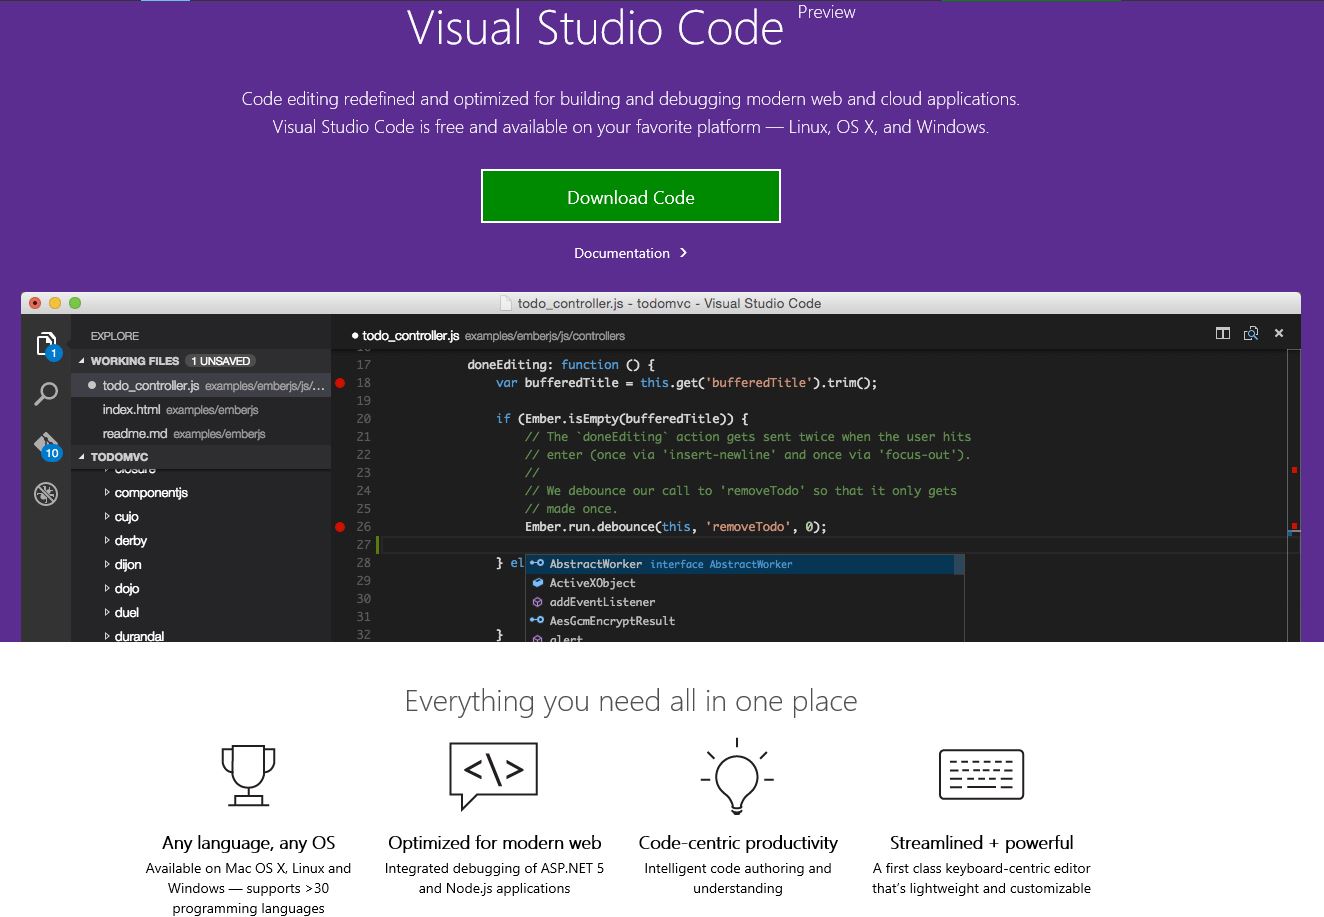 Microsoft Visual Studio Code for Your Platform #Linux #OSx #Windows | Cloud  and Datacenter Management Blog